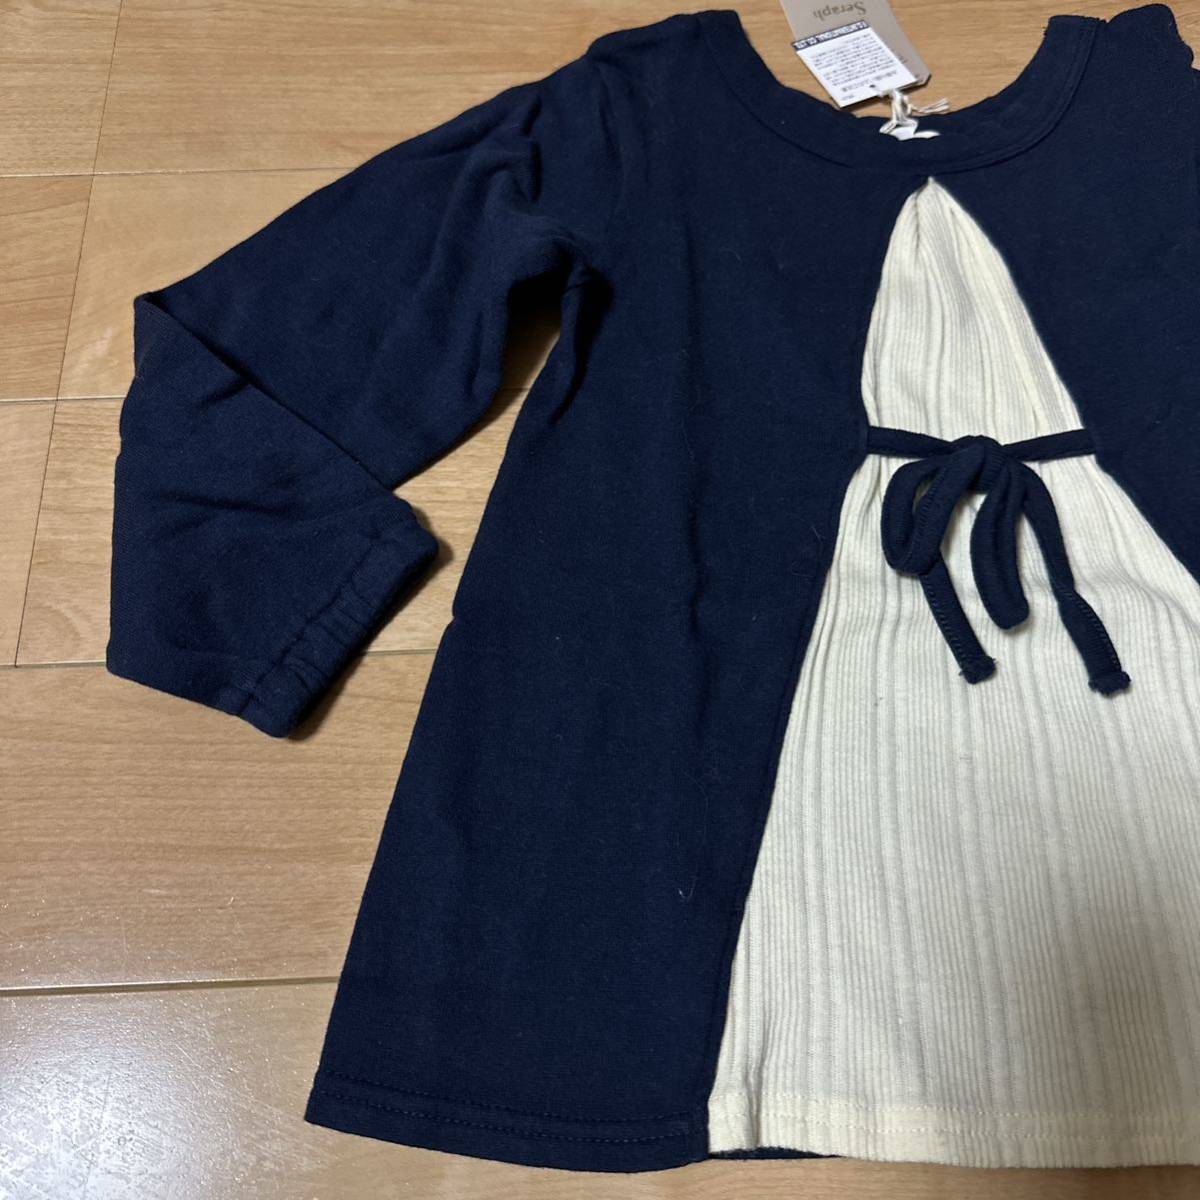  новый товар Seraphse черновой A линия рубашка tops 110 темно-синий 3045 иен туника mainpti мой n cut and sewn a pre re прохладный Blanc shes